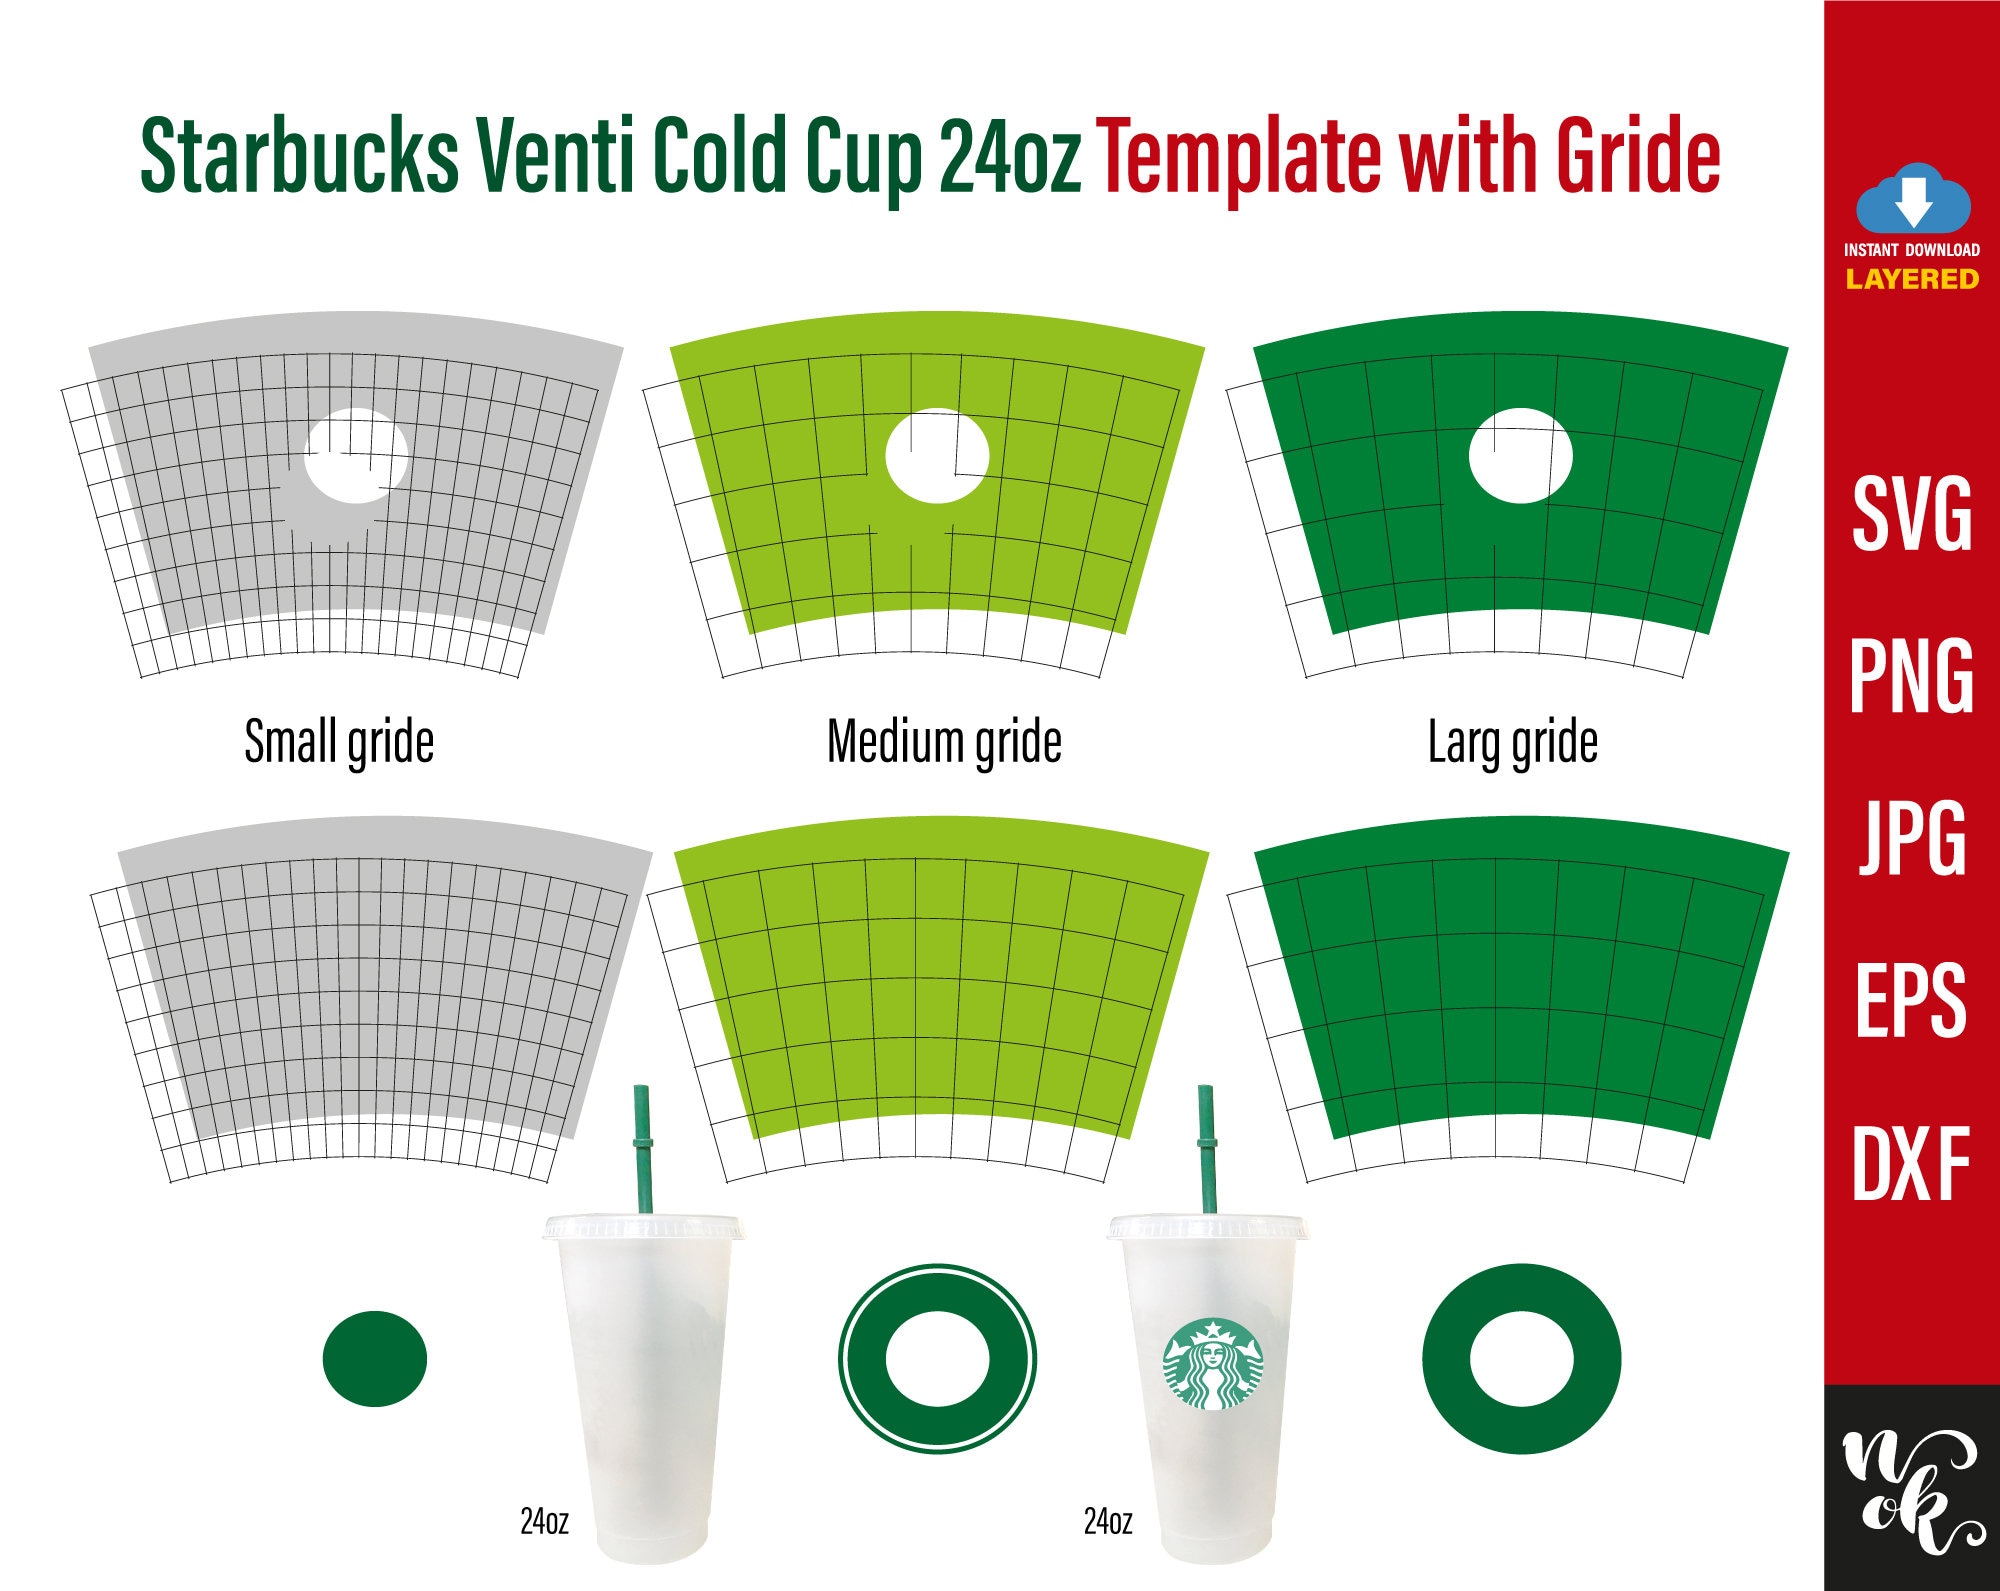 Starbucks cold cup wrap template - Cricut font, svg file for cricut &  Tutorials